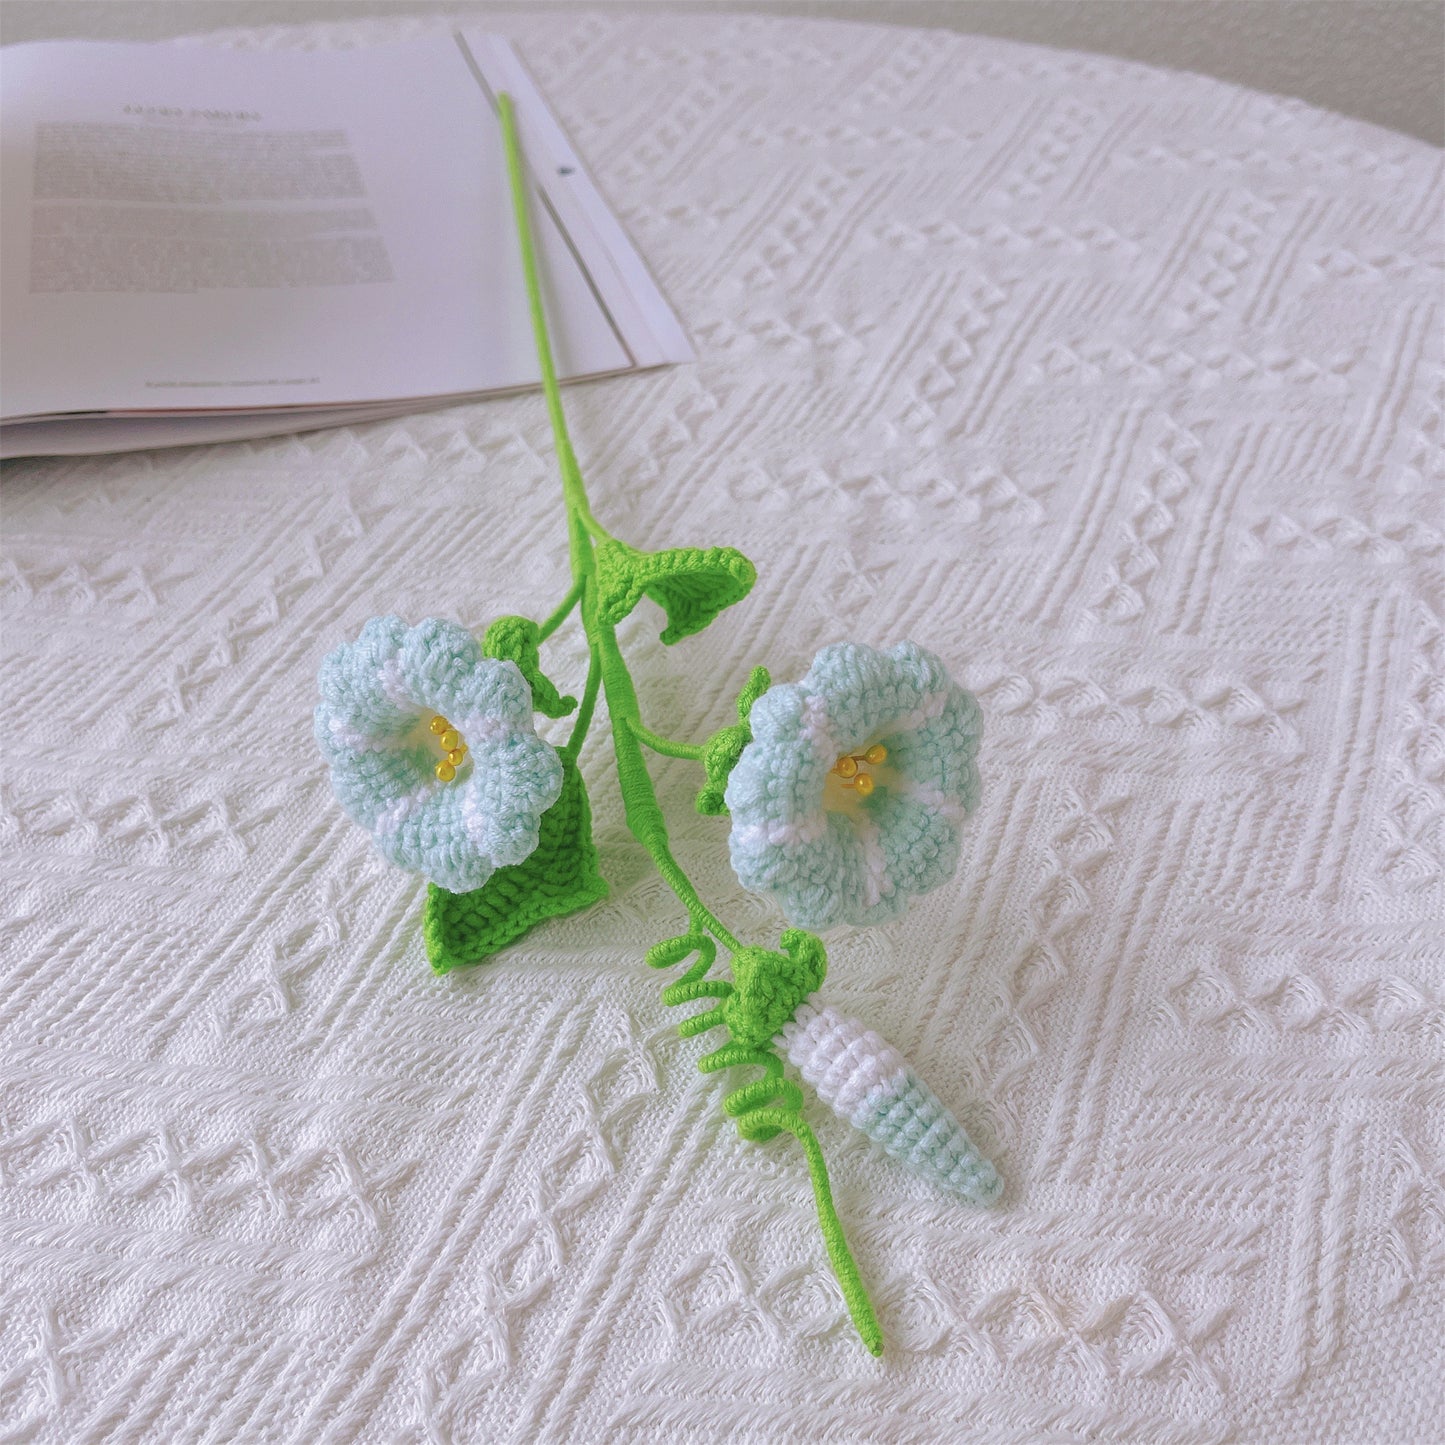 Morning Glory Dream: Handcrafted Crochet Morning Glory Stake for Whimsical Garden Decor